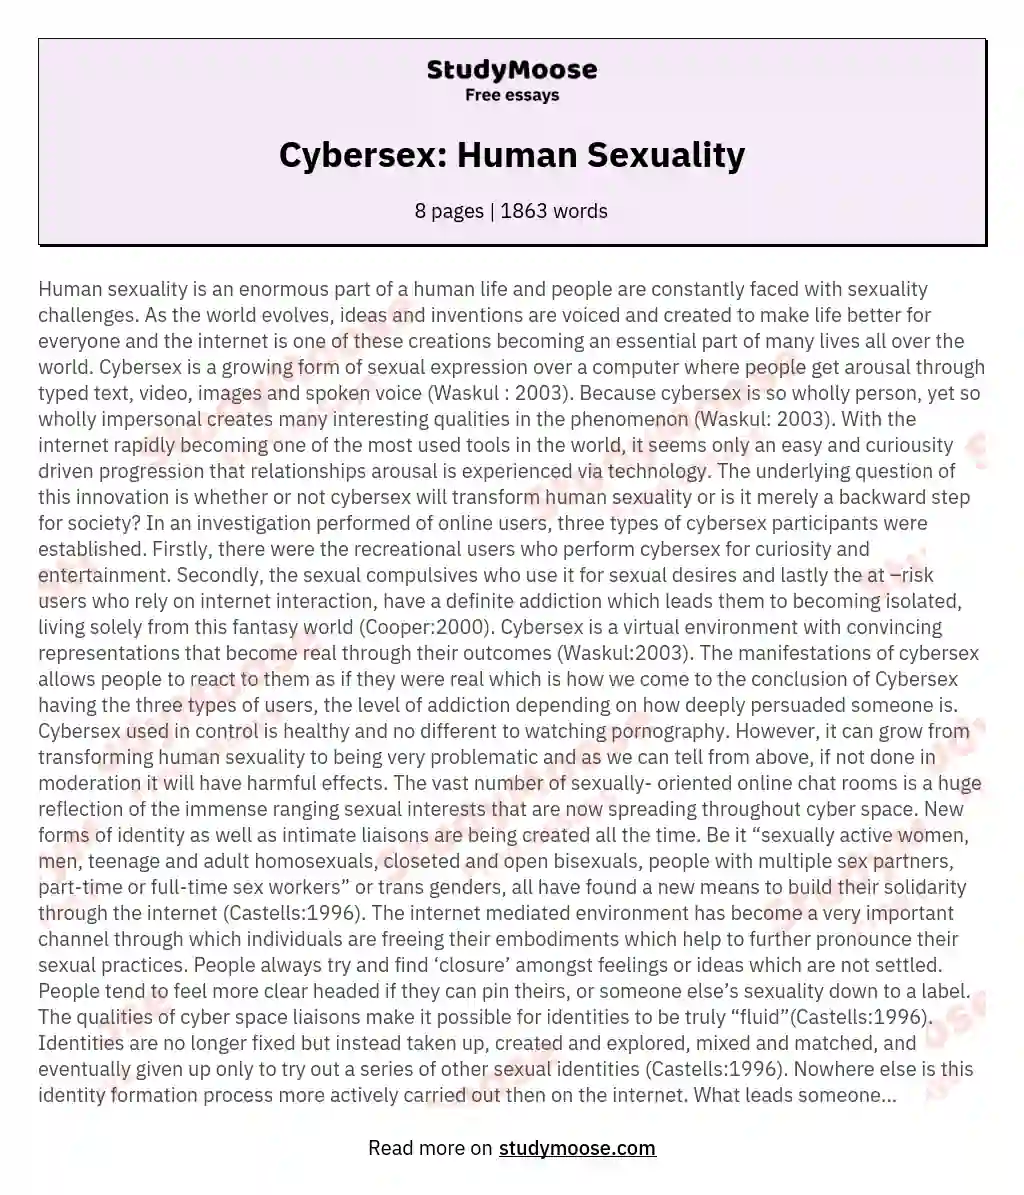 Cybersex: Human Sexuality essay